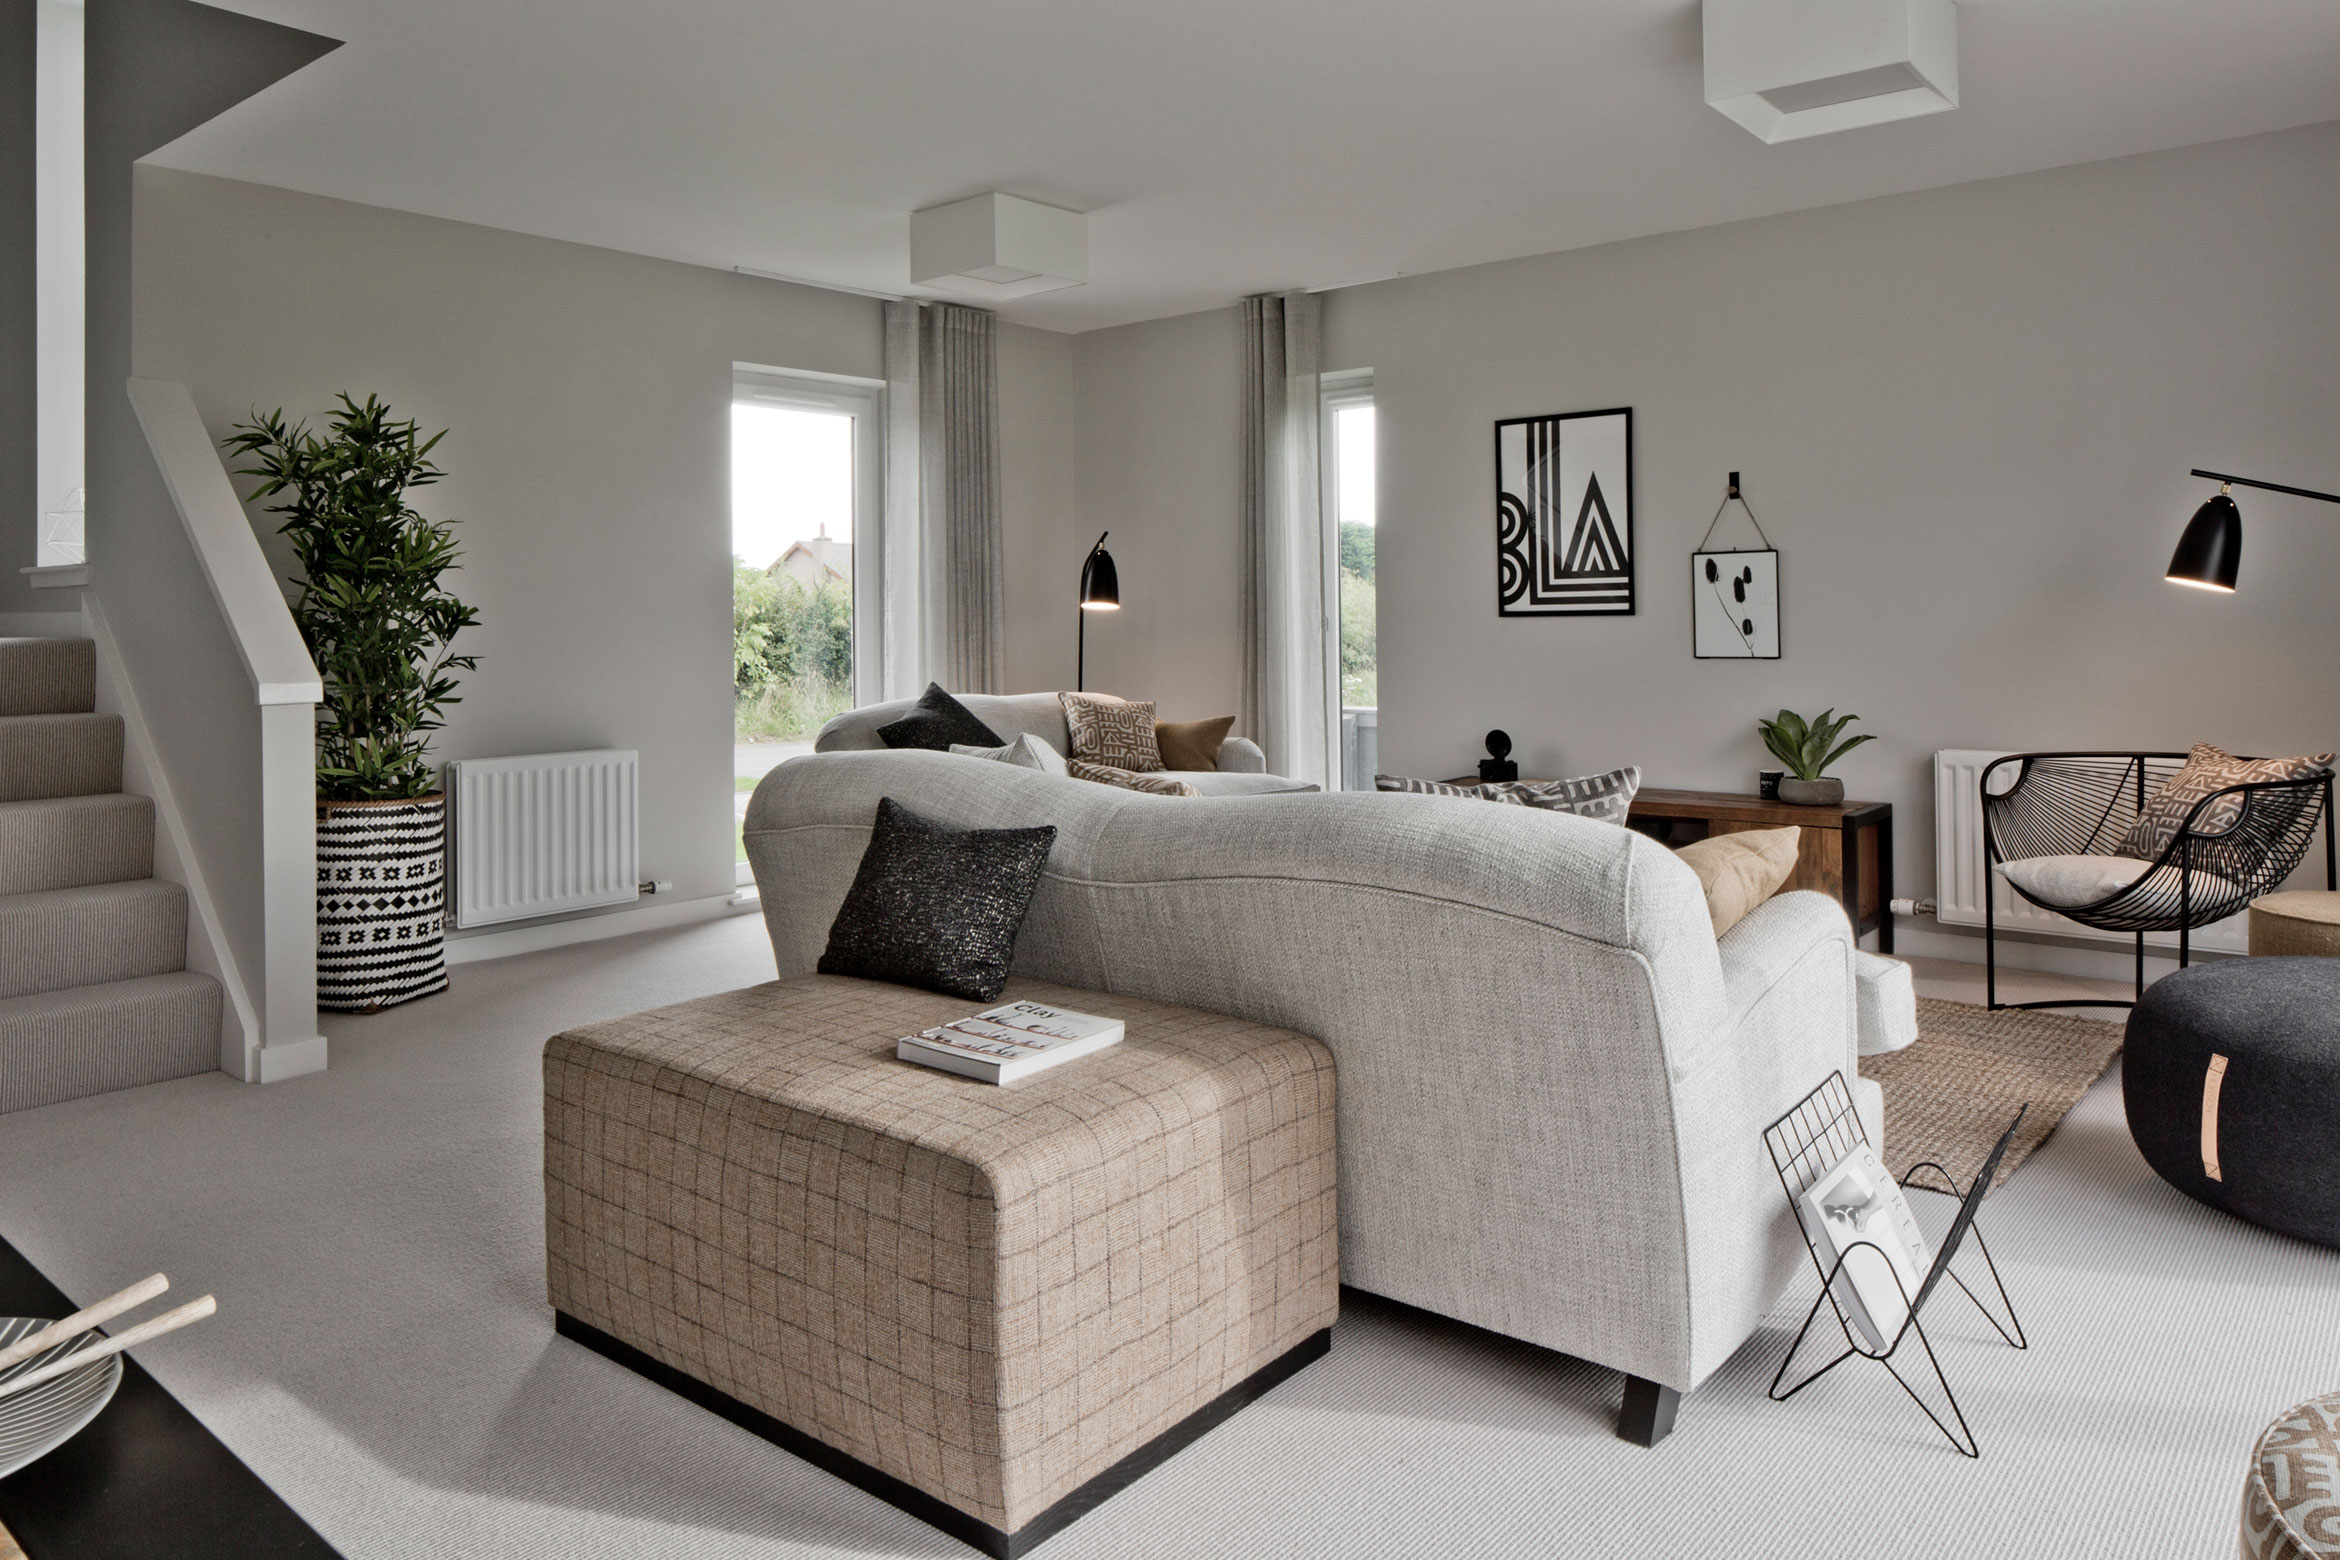 Must Have contemporary Scottish soft furnishings to brighten your interior!  — Mairi Helena